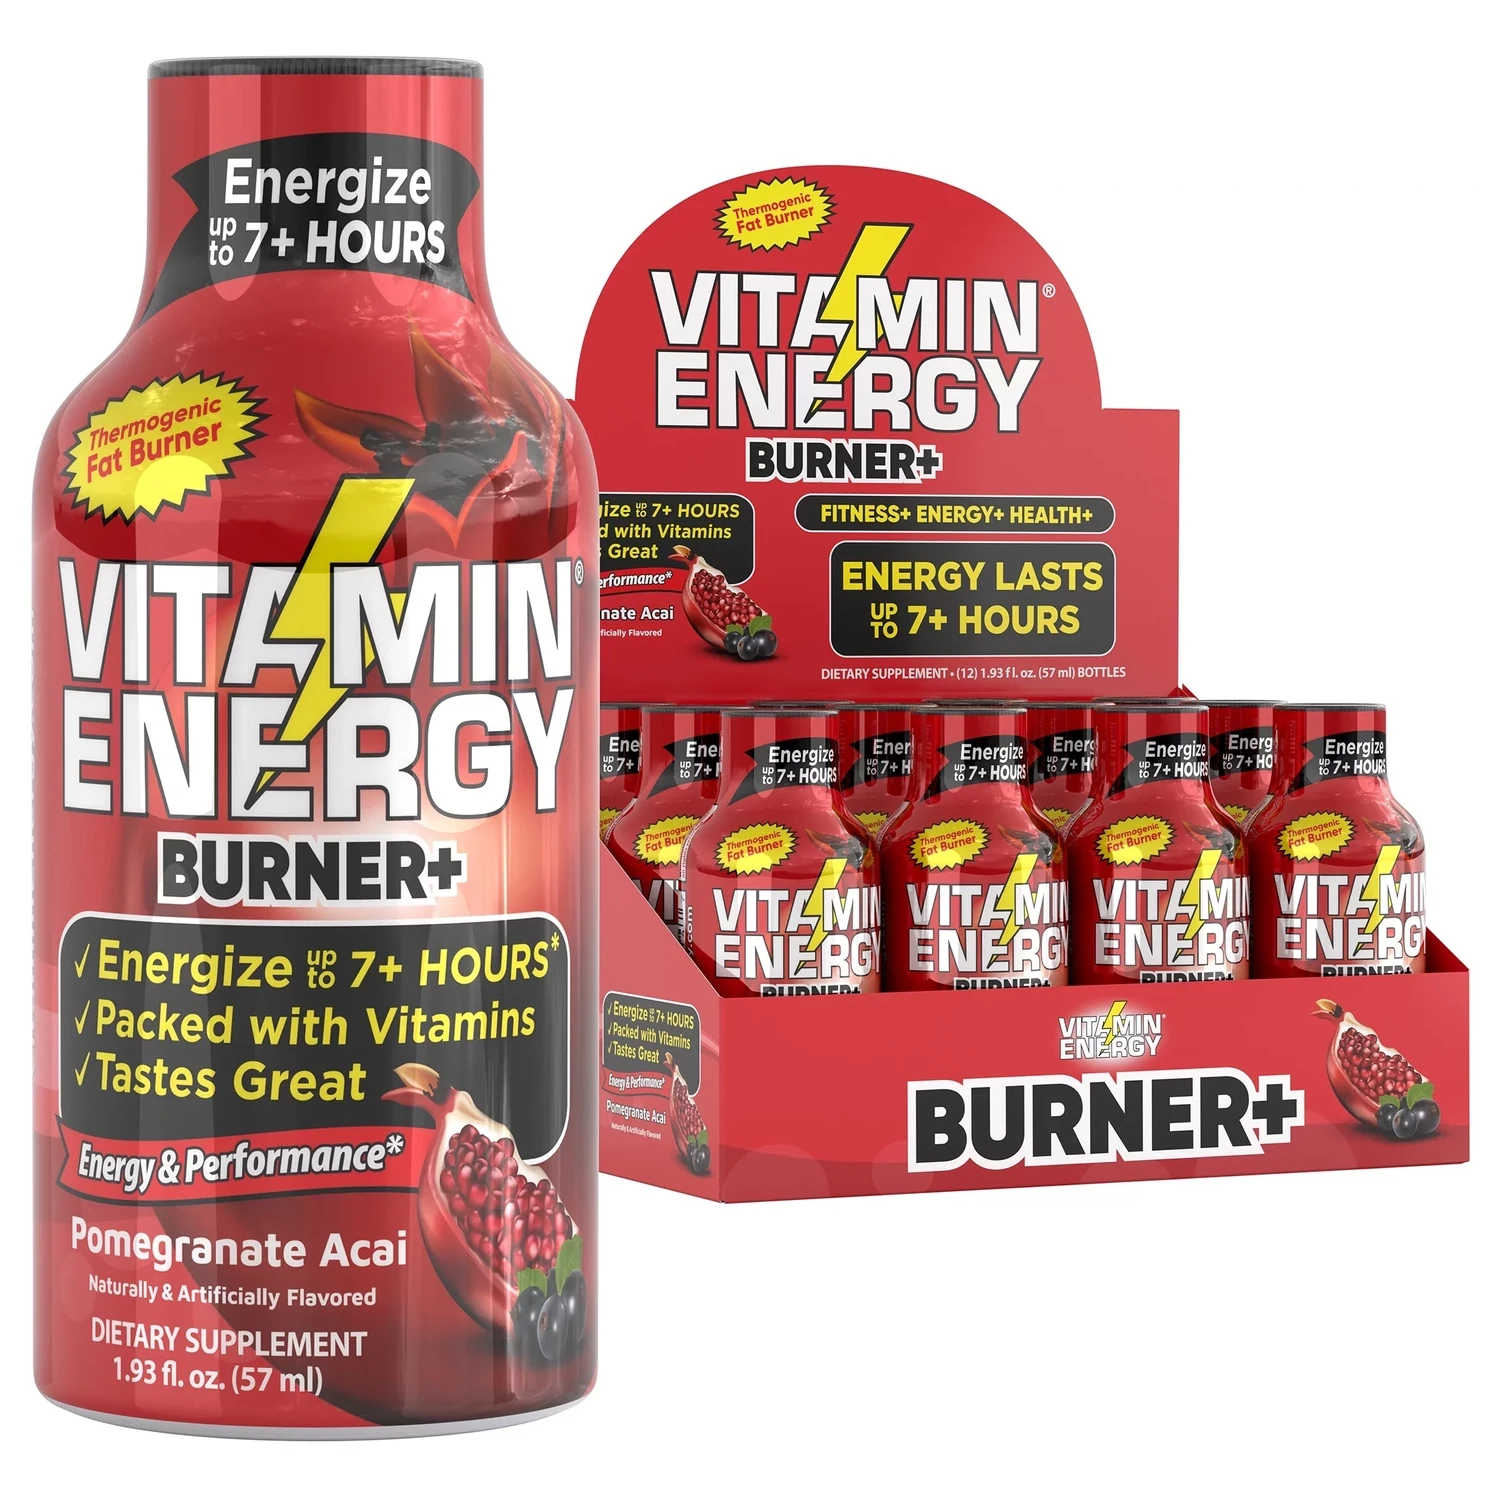 VitaminEnergy® Burner+